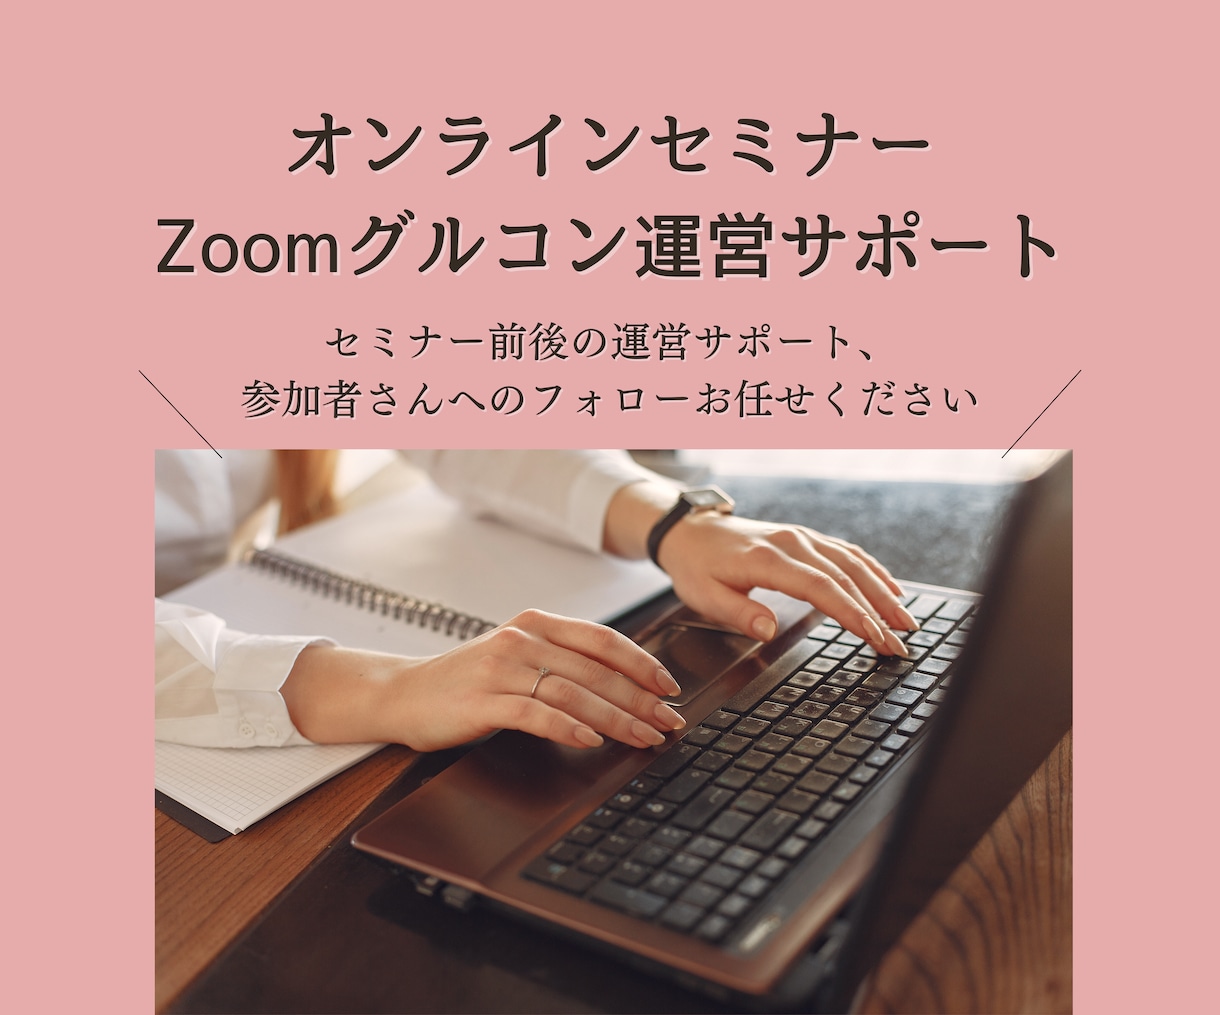 Zoomセミナー/グルコン運営サポート引き受けます 有料サロン・高額スクール運営サポート【稼働中】オンライン秘書 イメージ1